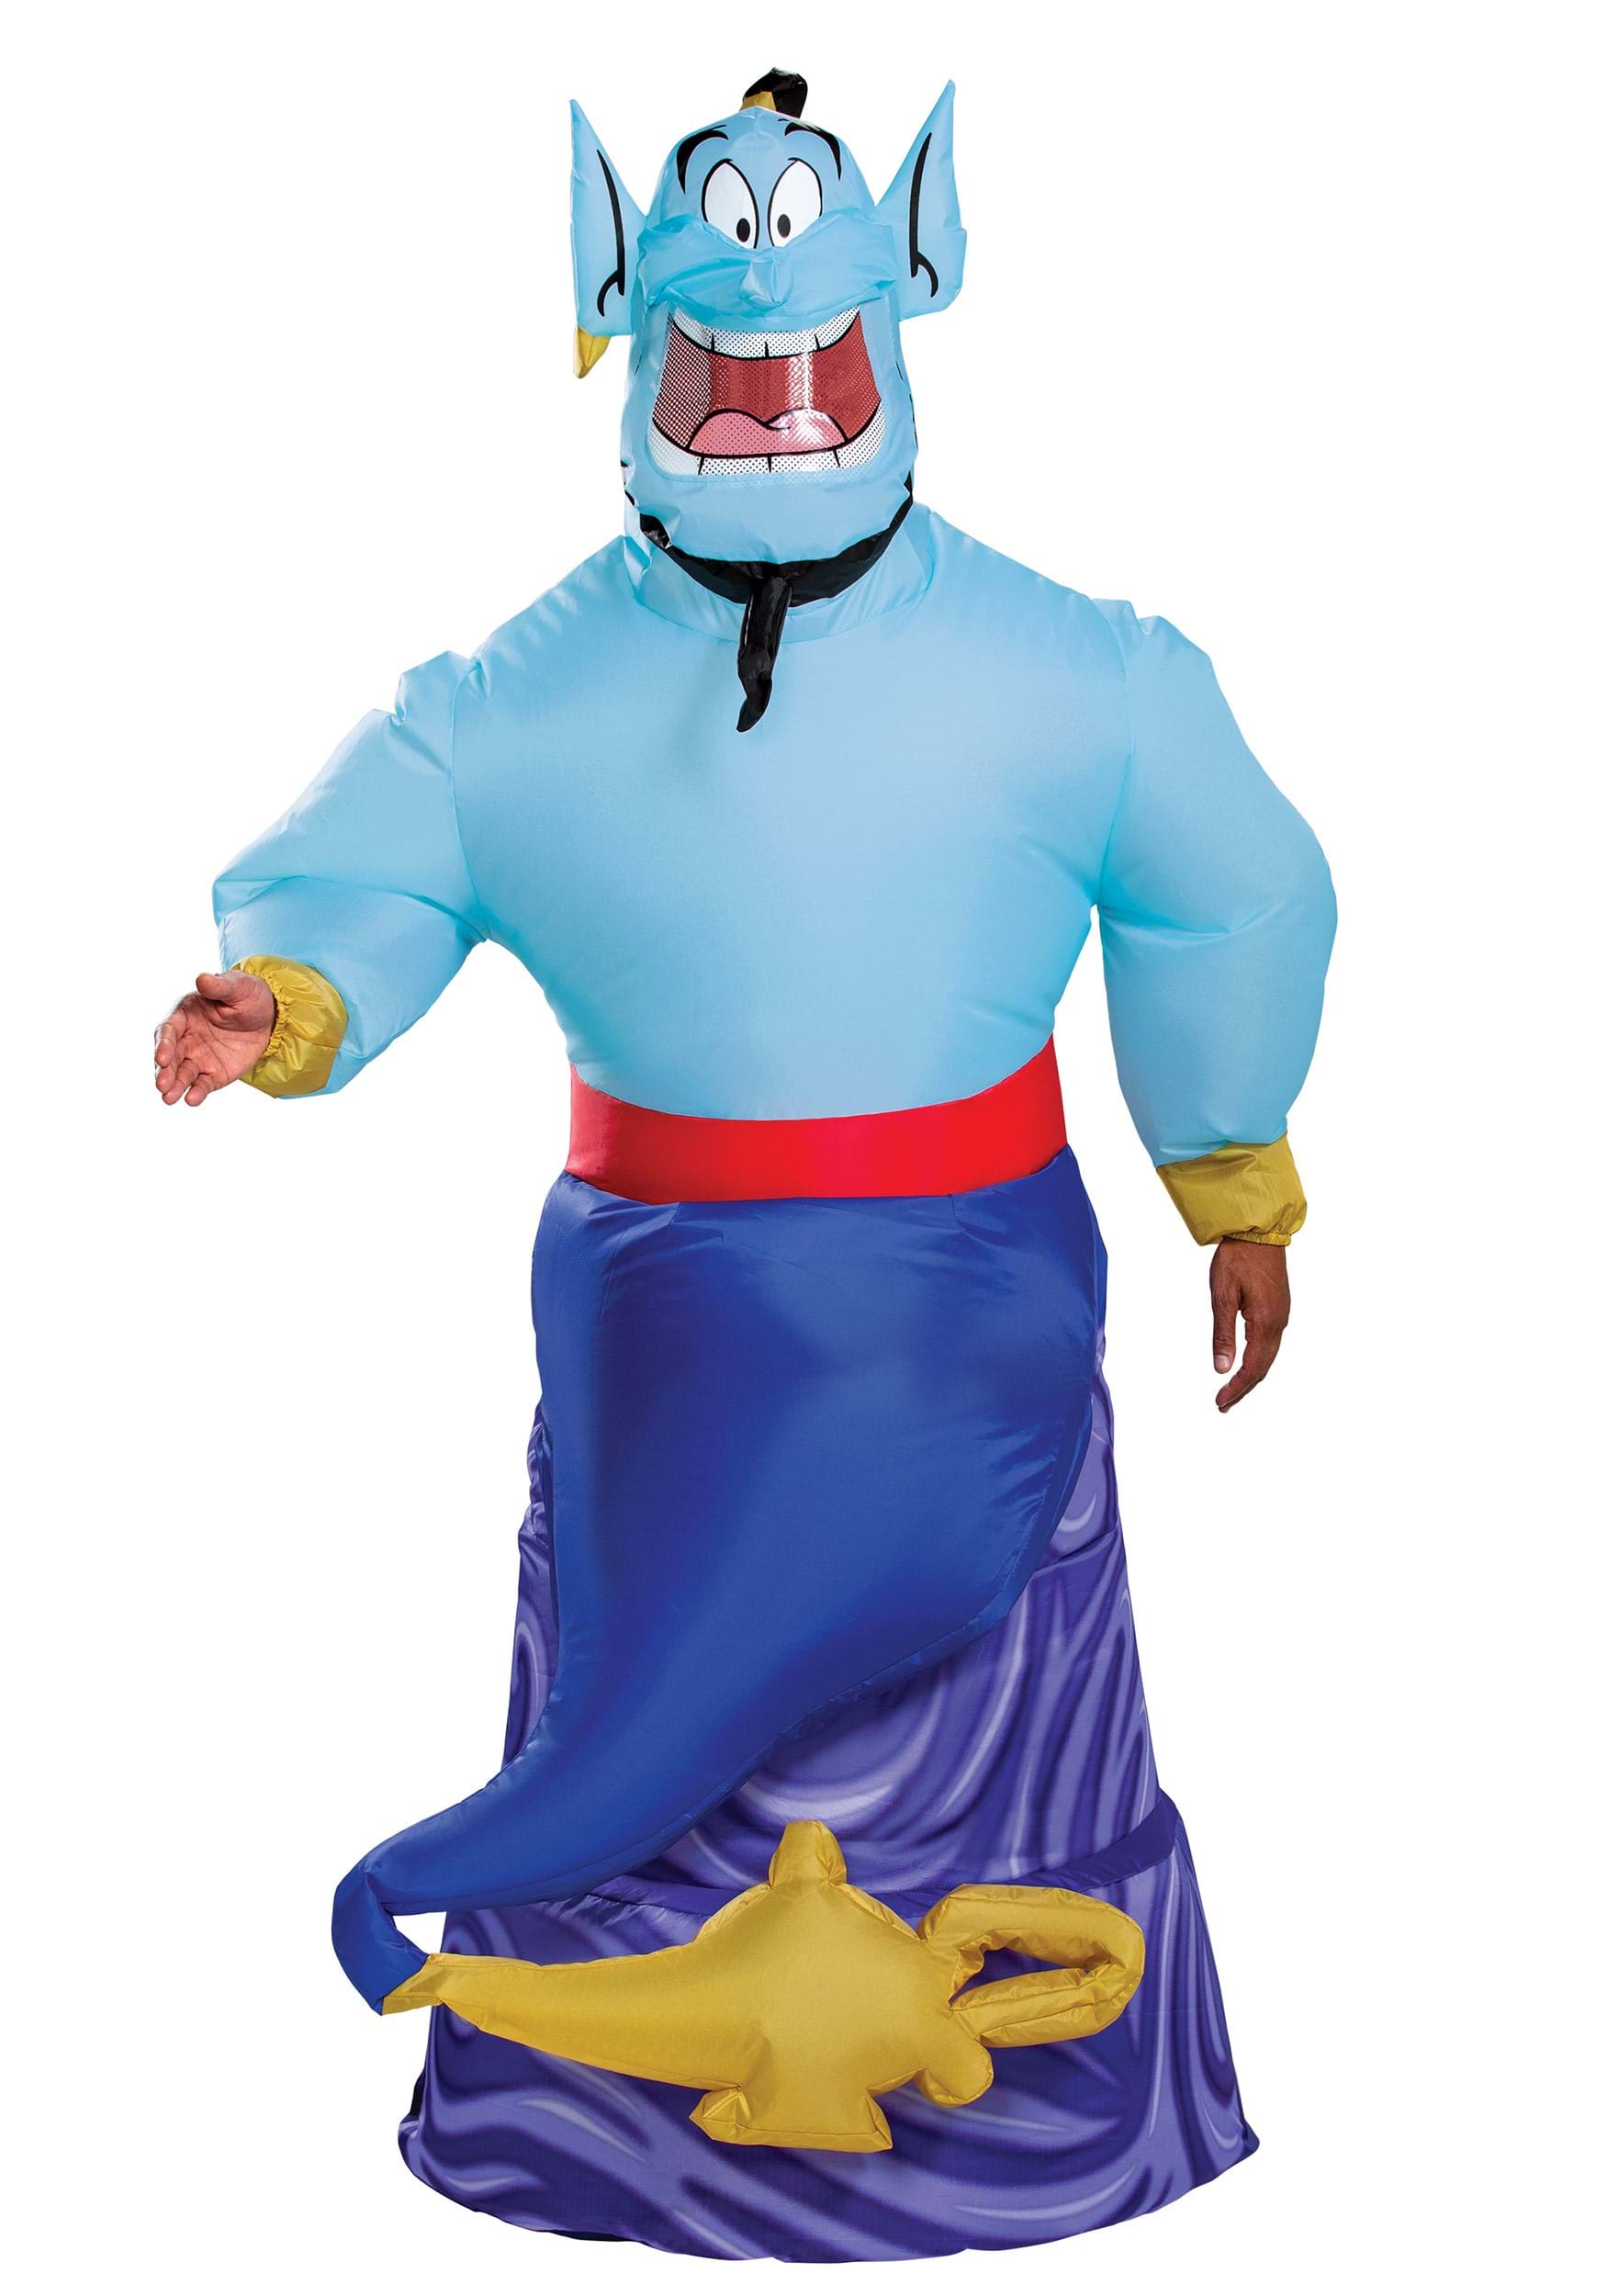 Fantasia inflável de gênio adulto de Aladdin - Aladdin (Animated) Adult  Genie Inflatable Costume